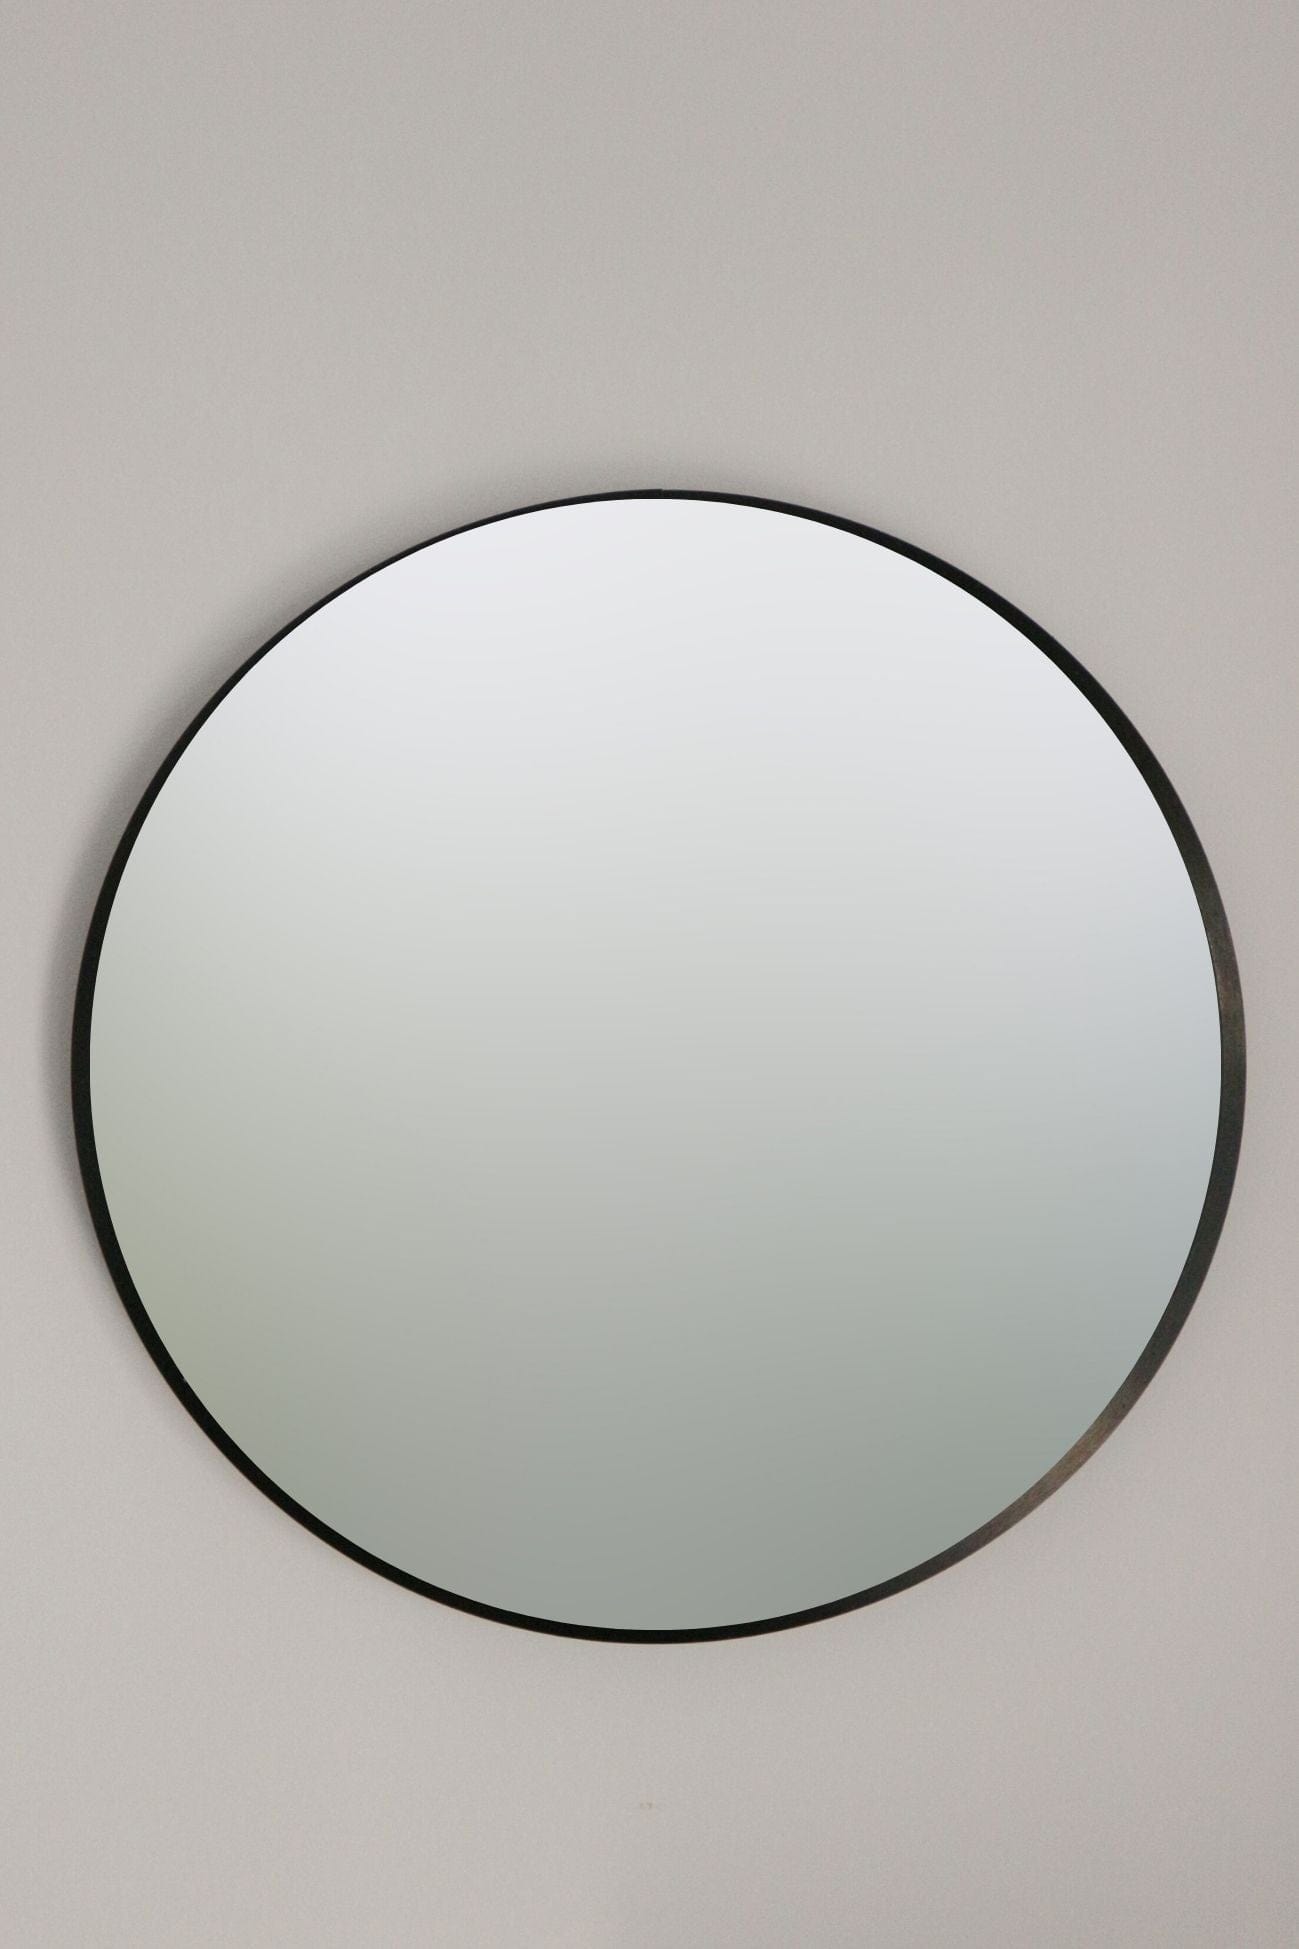 Item International Groovy Groovy - Specchio tondo in alluminio nero | Item International